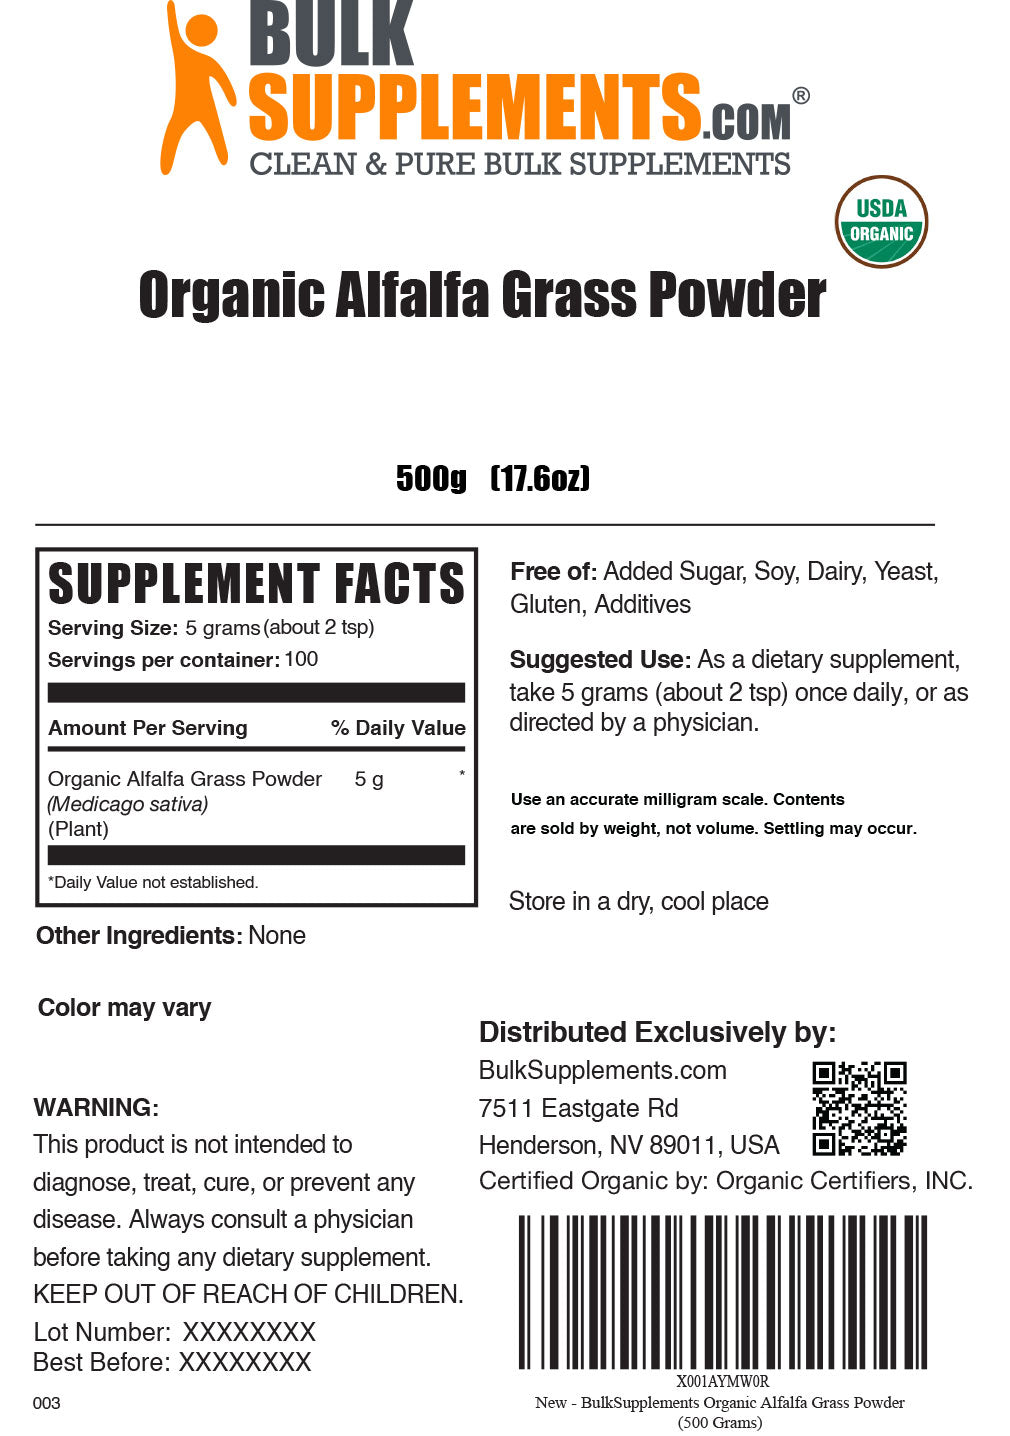 Organic Alfalfa Grass powder label 500g